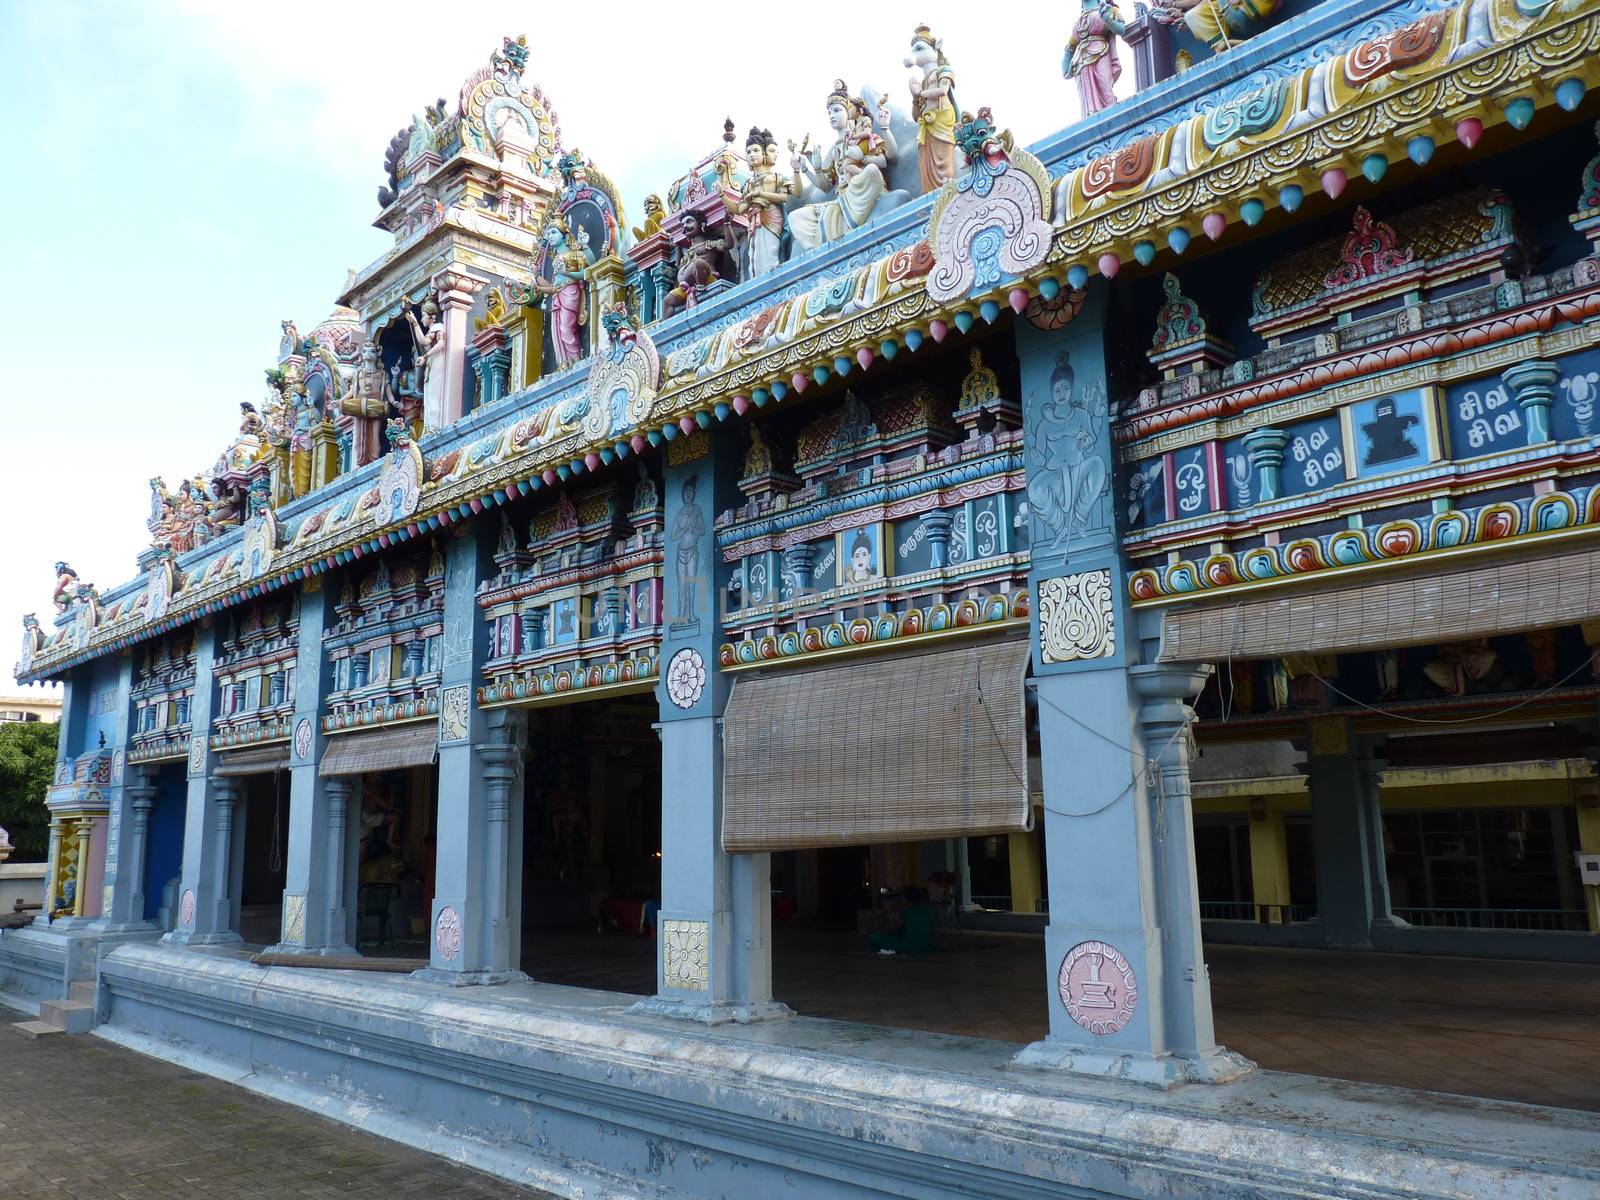 Tamil Surya Oudaya Sangam Temple by nicousnake